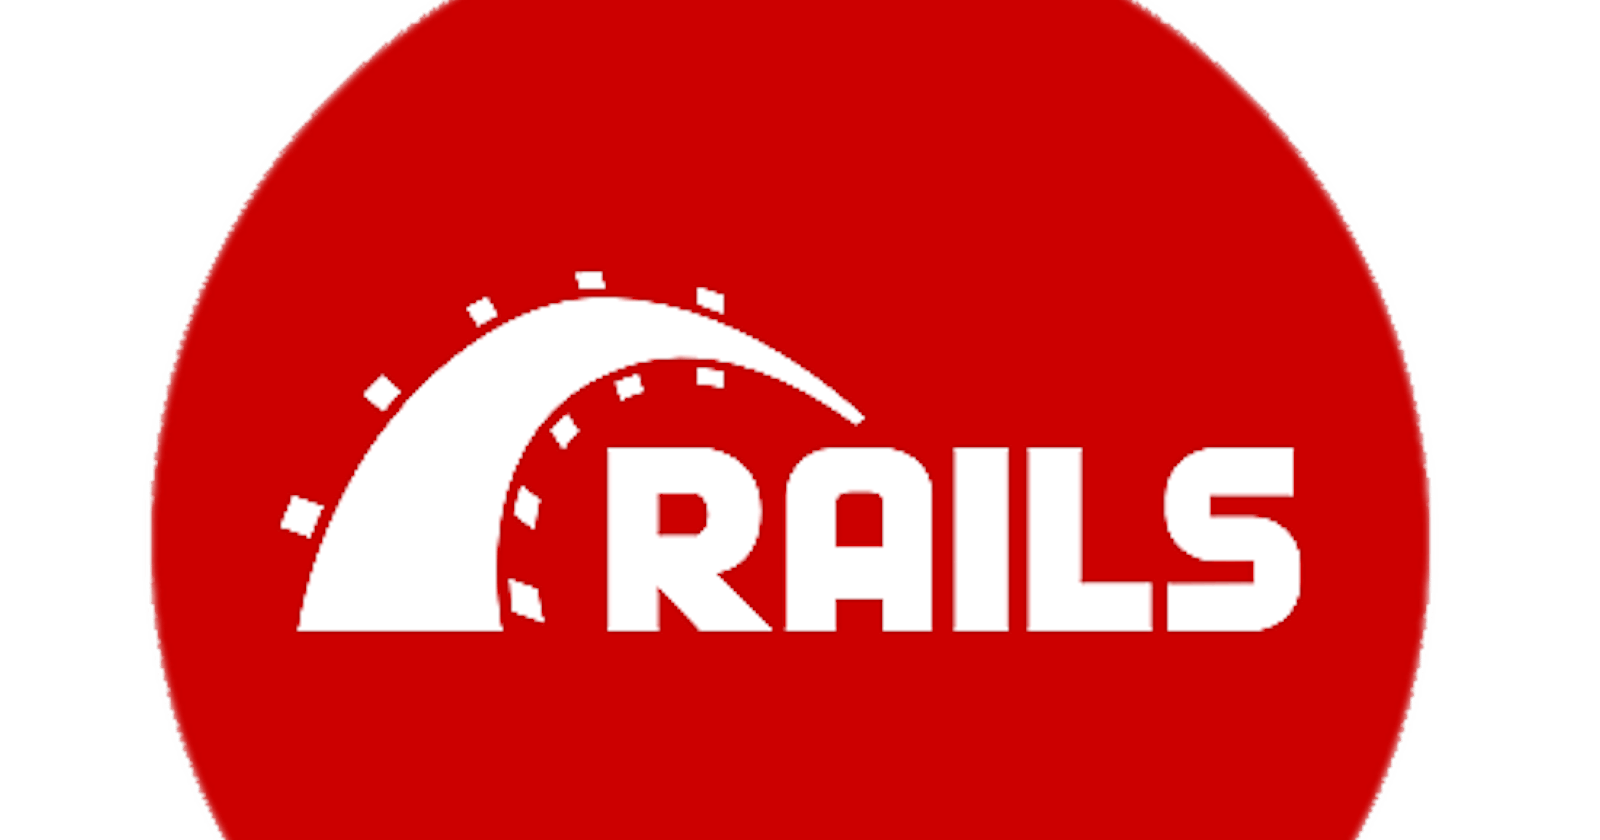 Using the update_attribute() API using the rails console